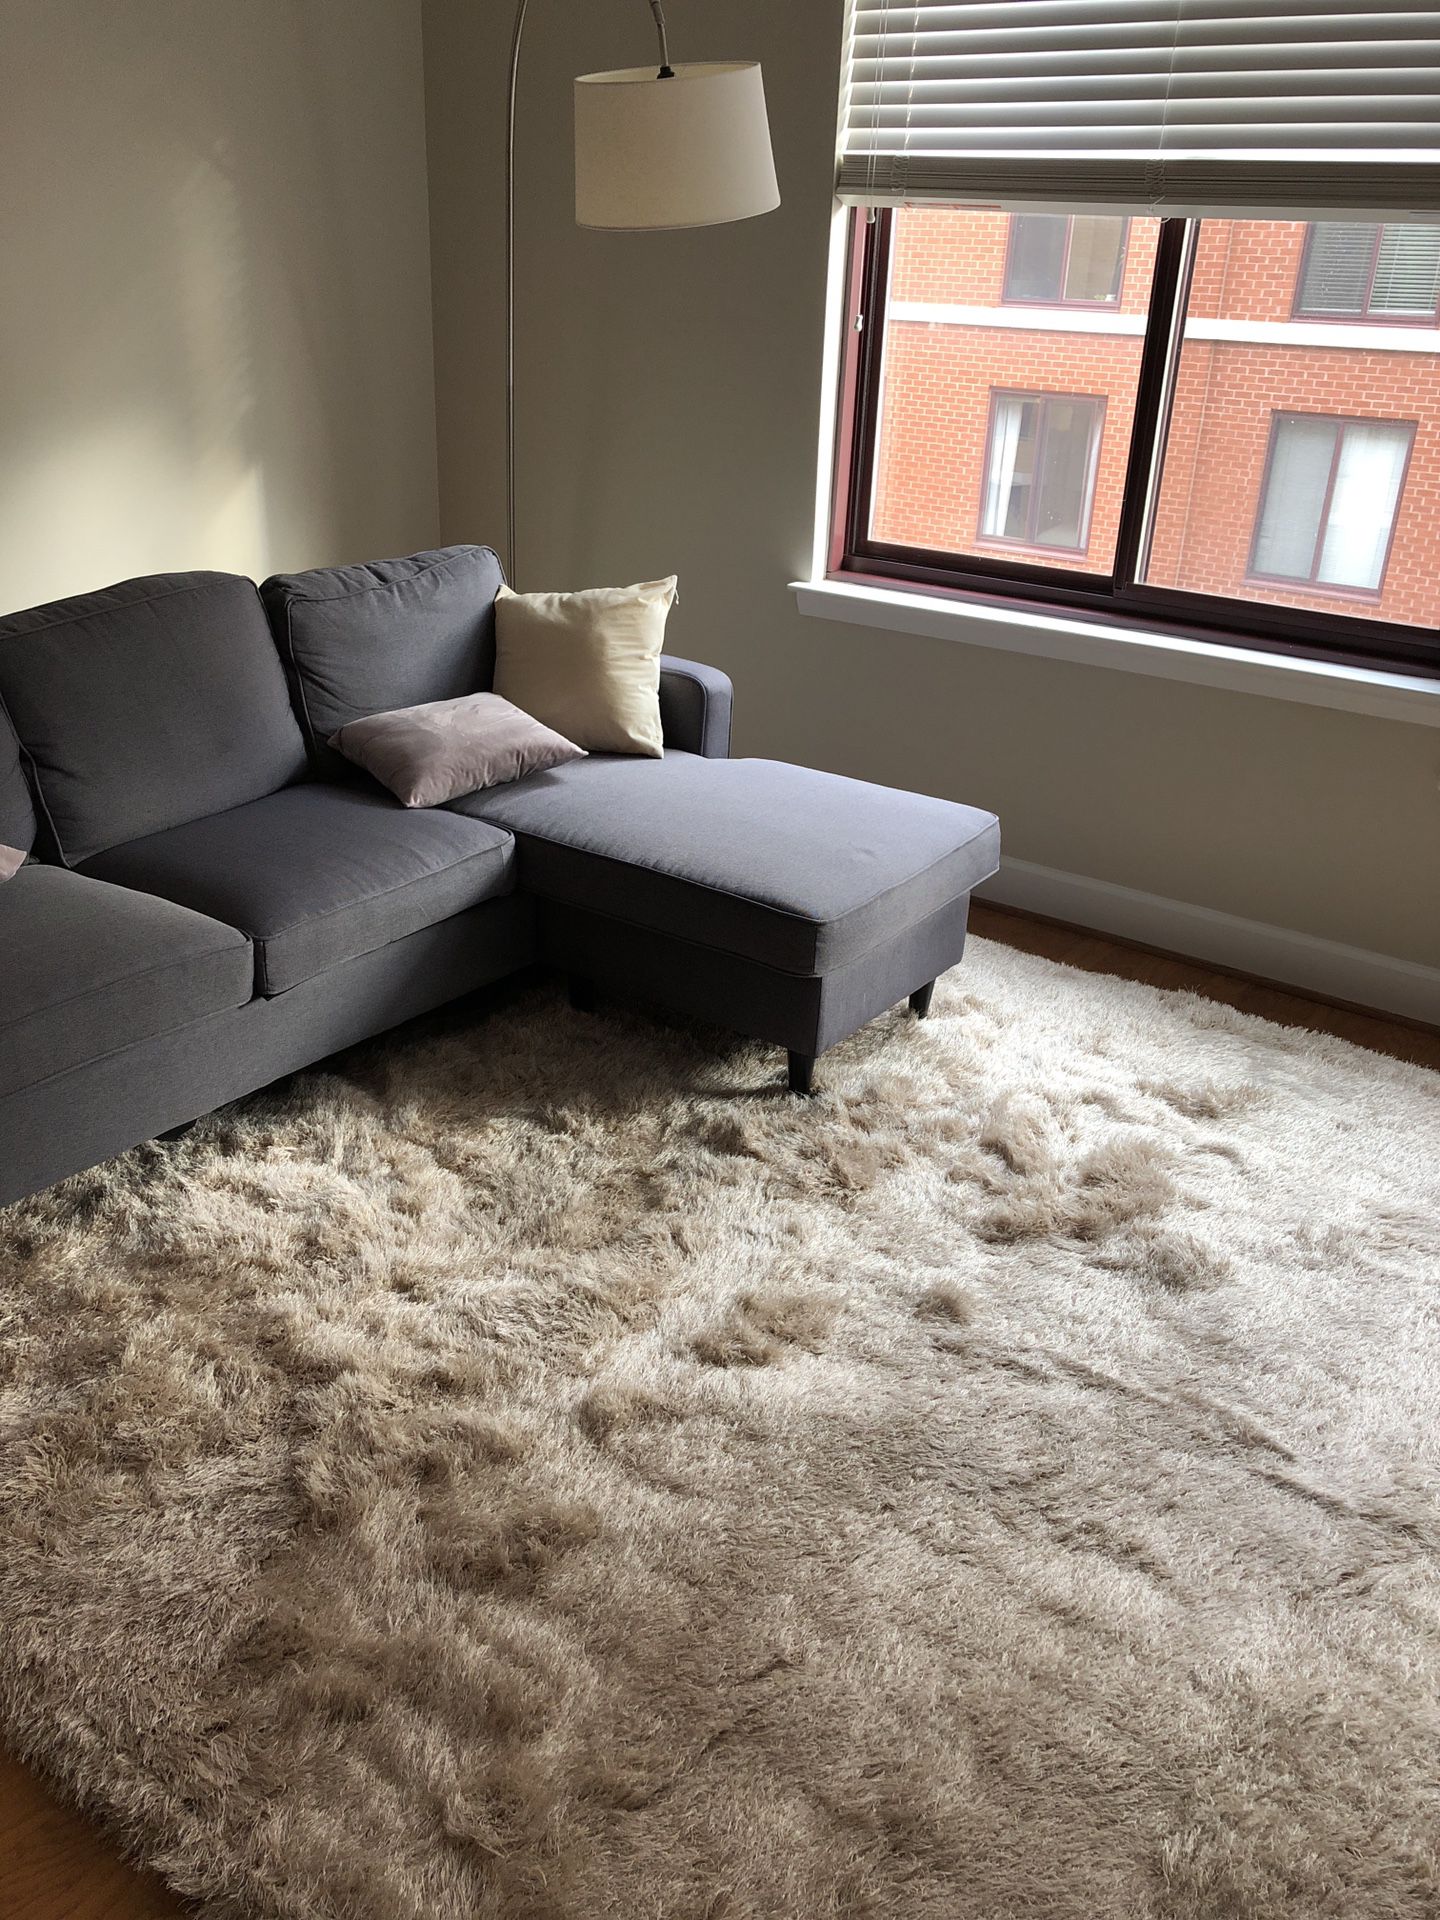 Sofa sectional $375 OBO